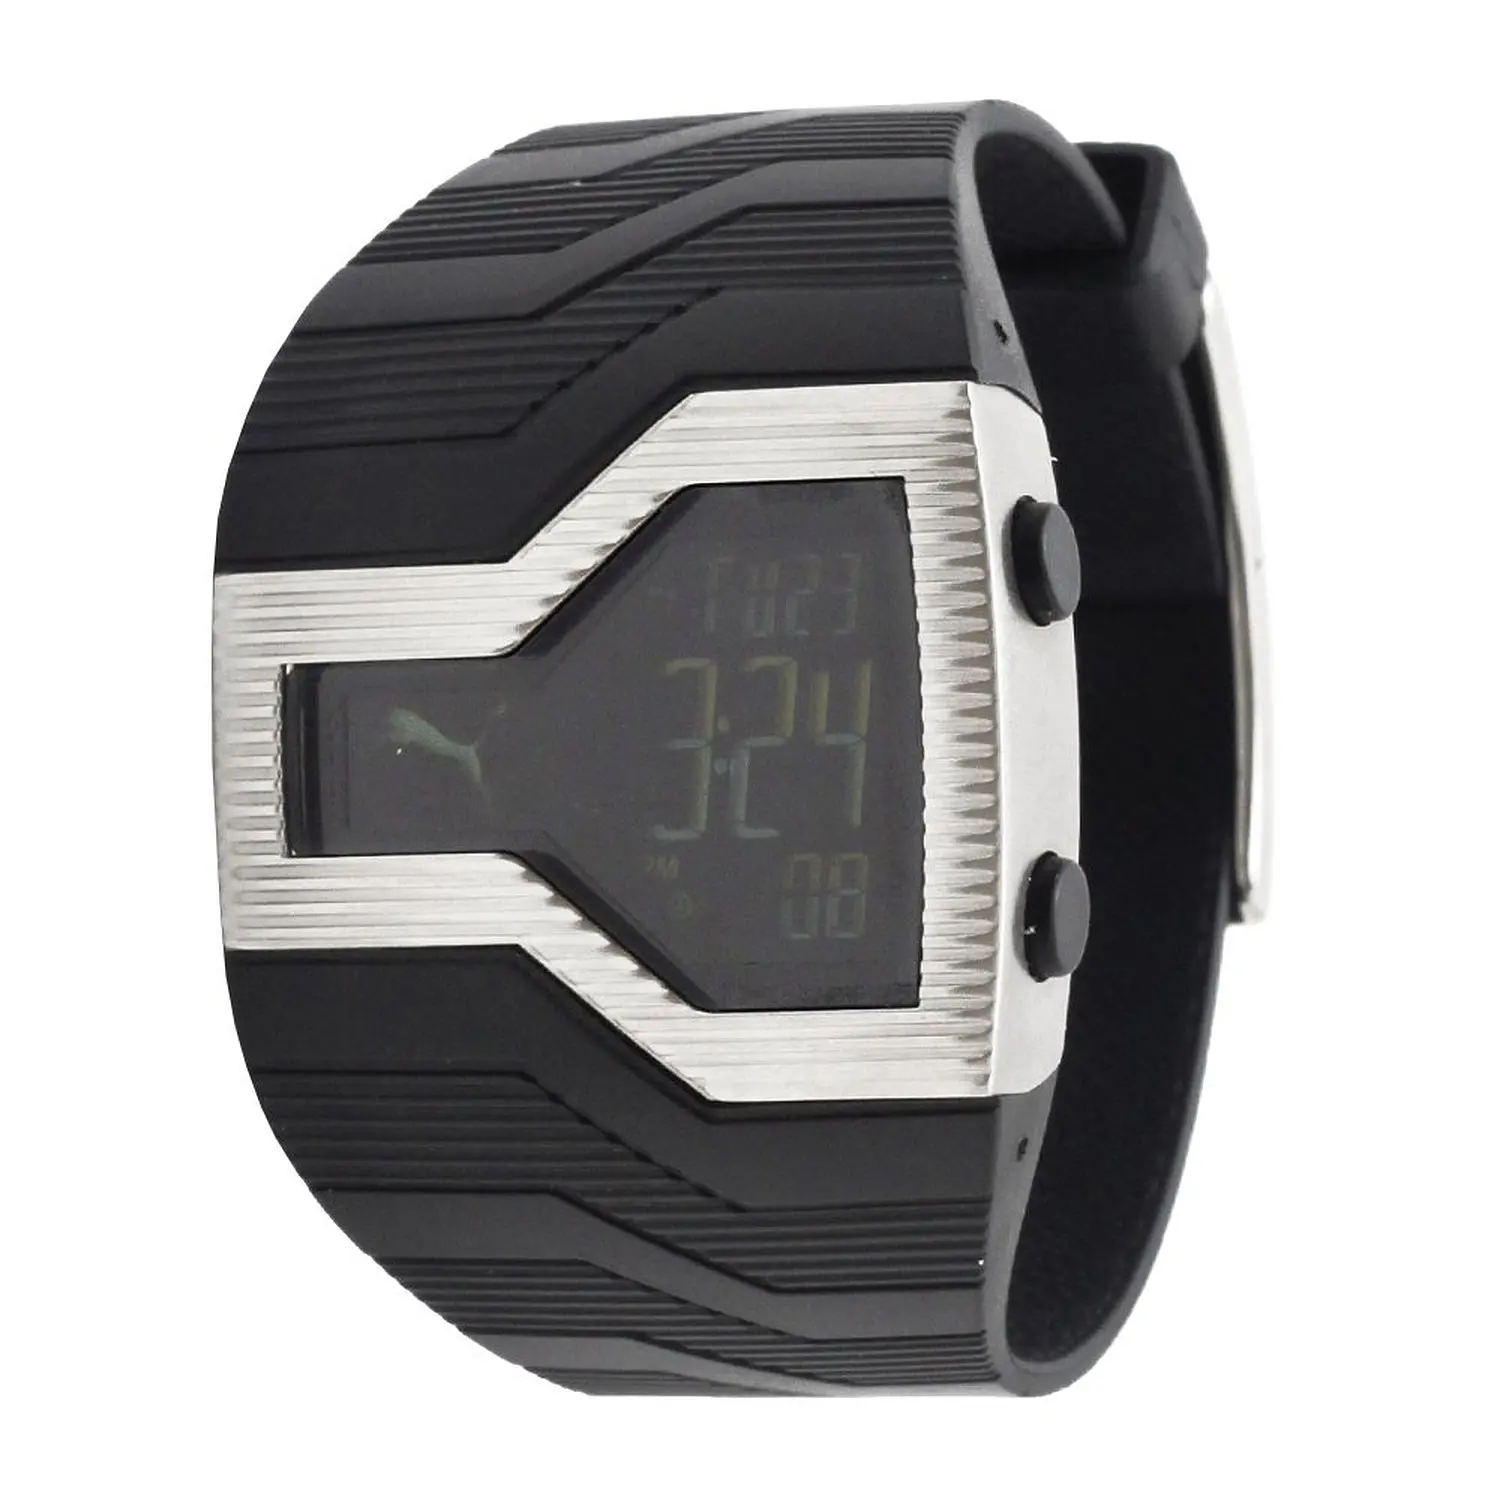 puma 805 watch manual